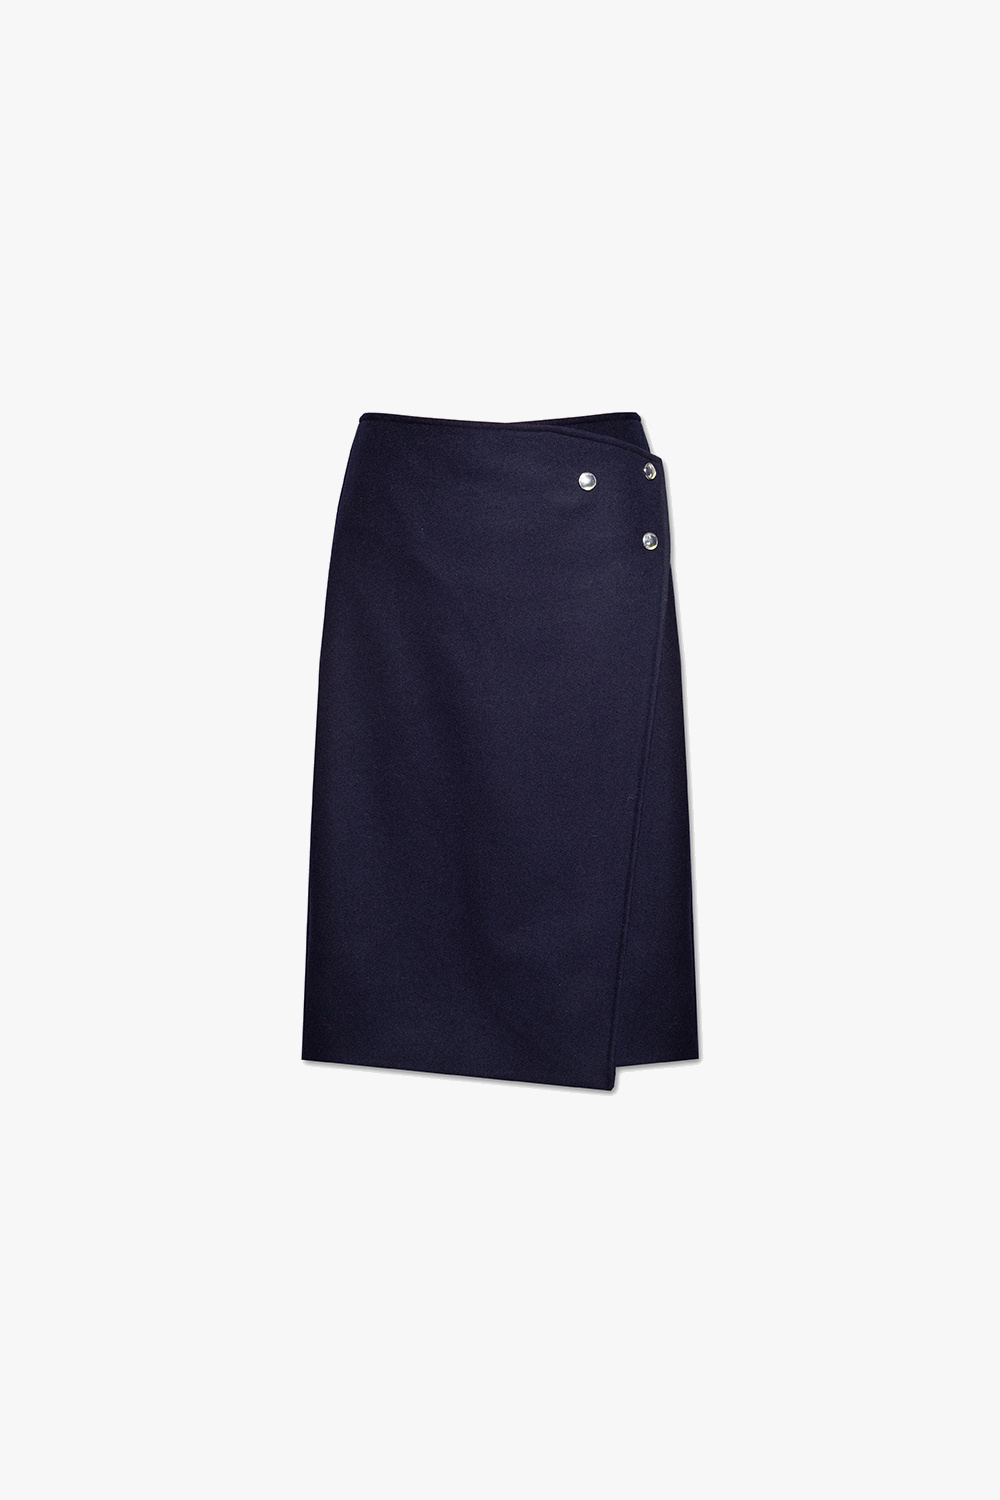 Burberry ‘Peony’ skirt